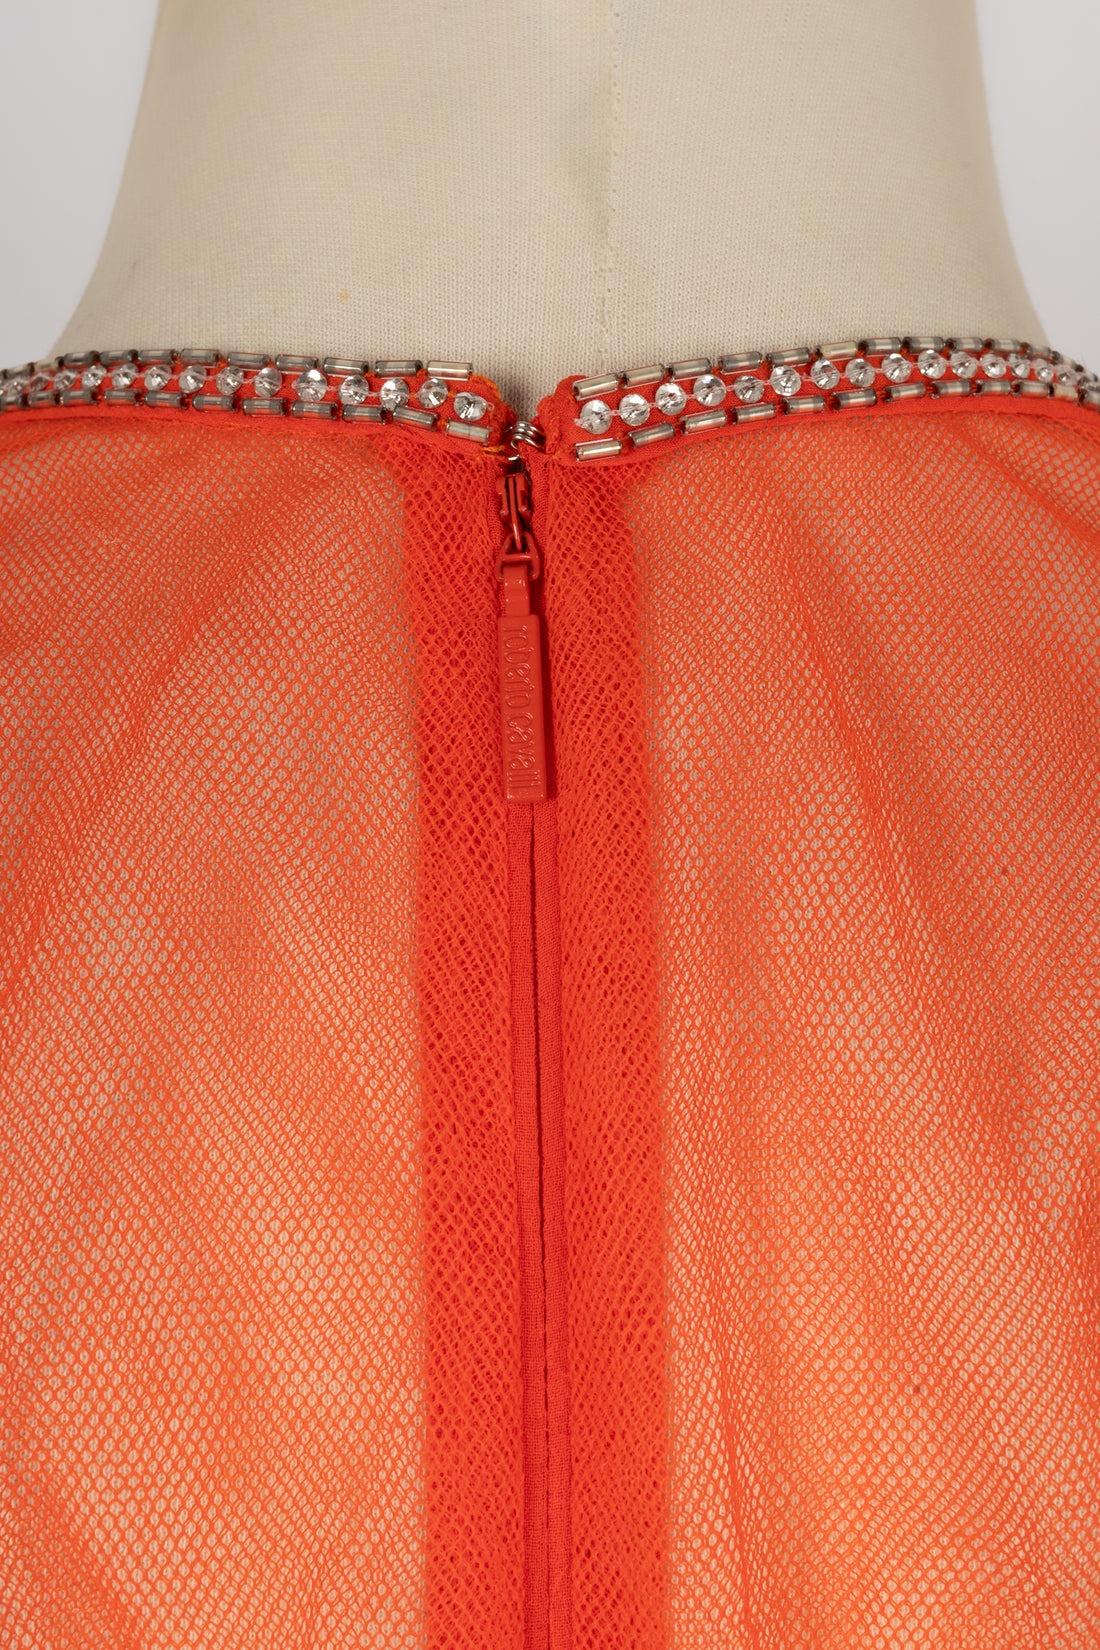 Cavalli Feather Long Orange Tulle Dress For Sale 2